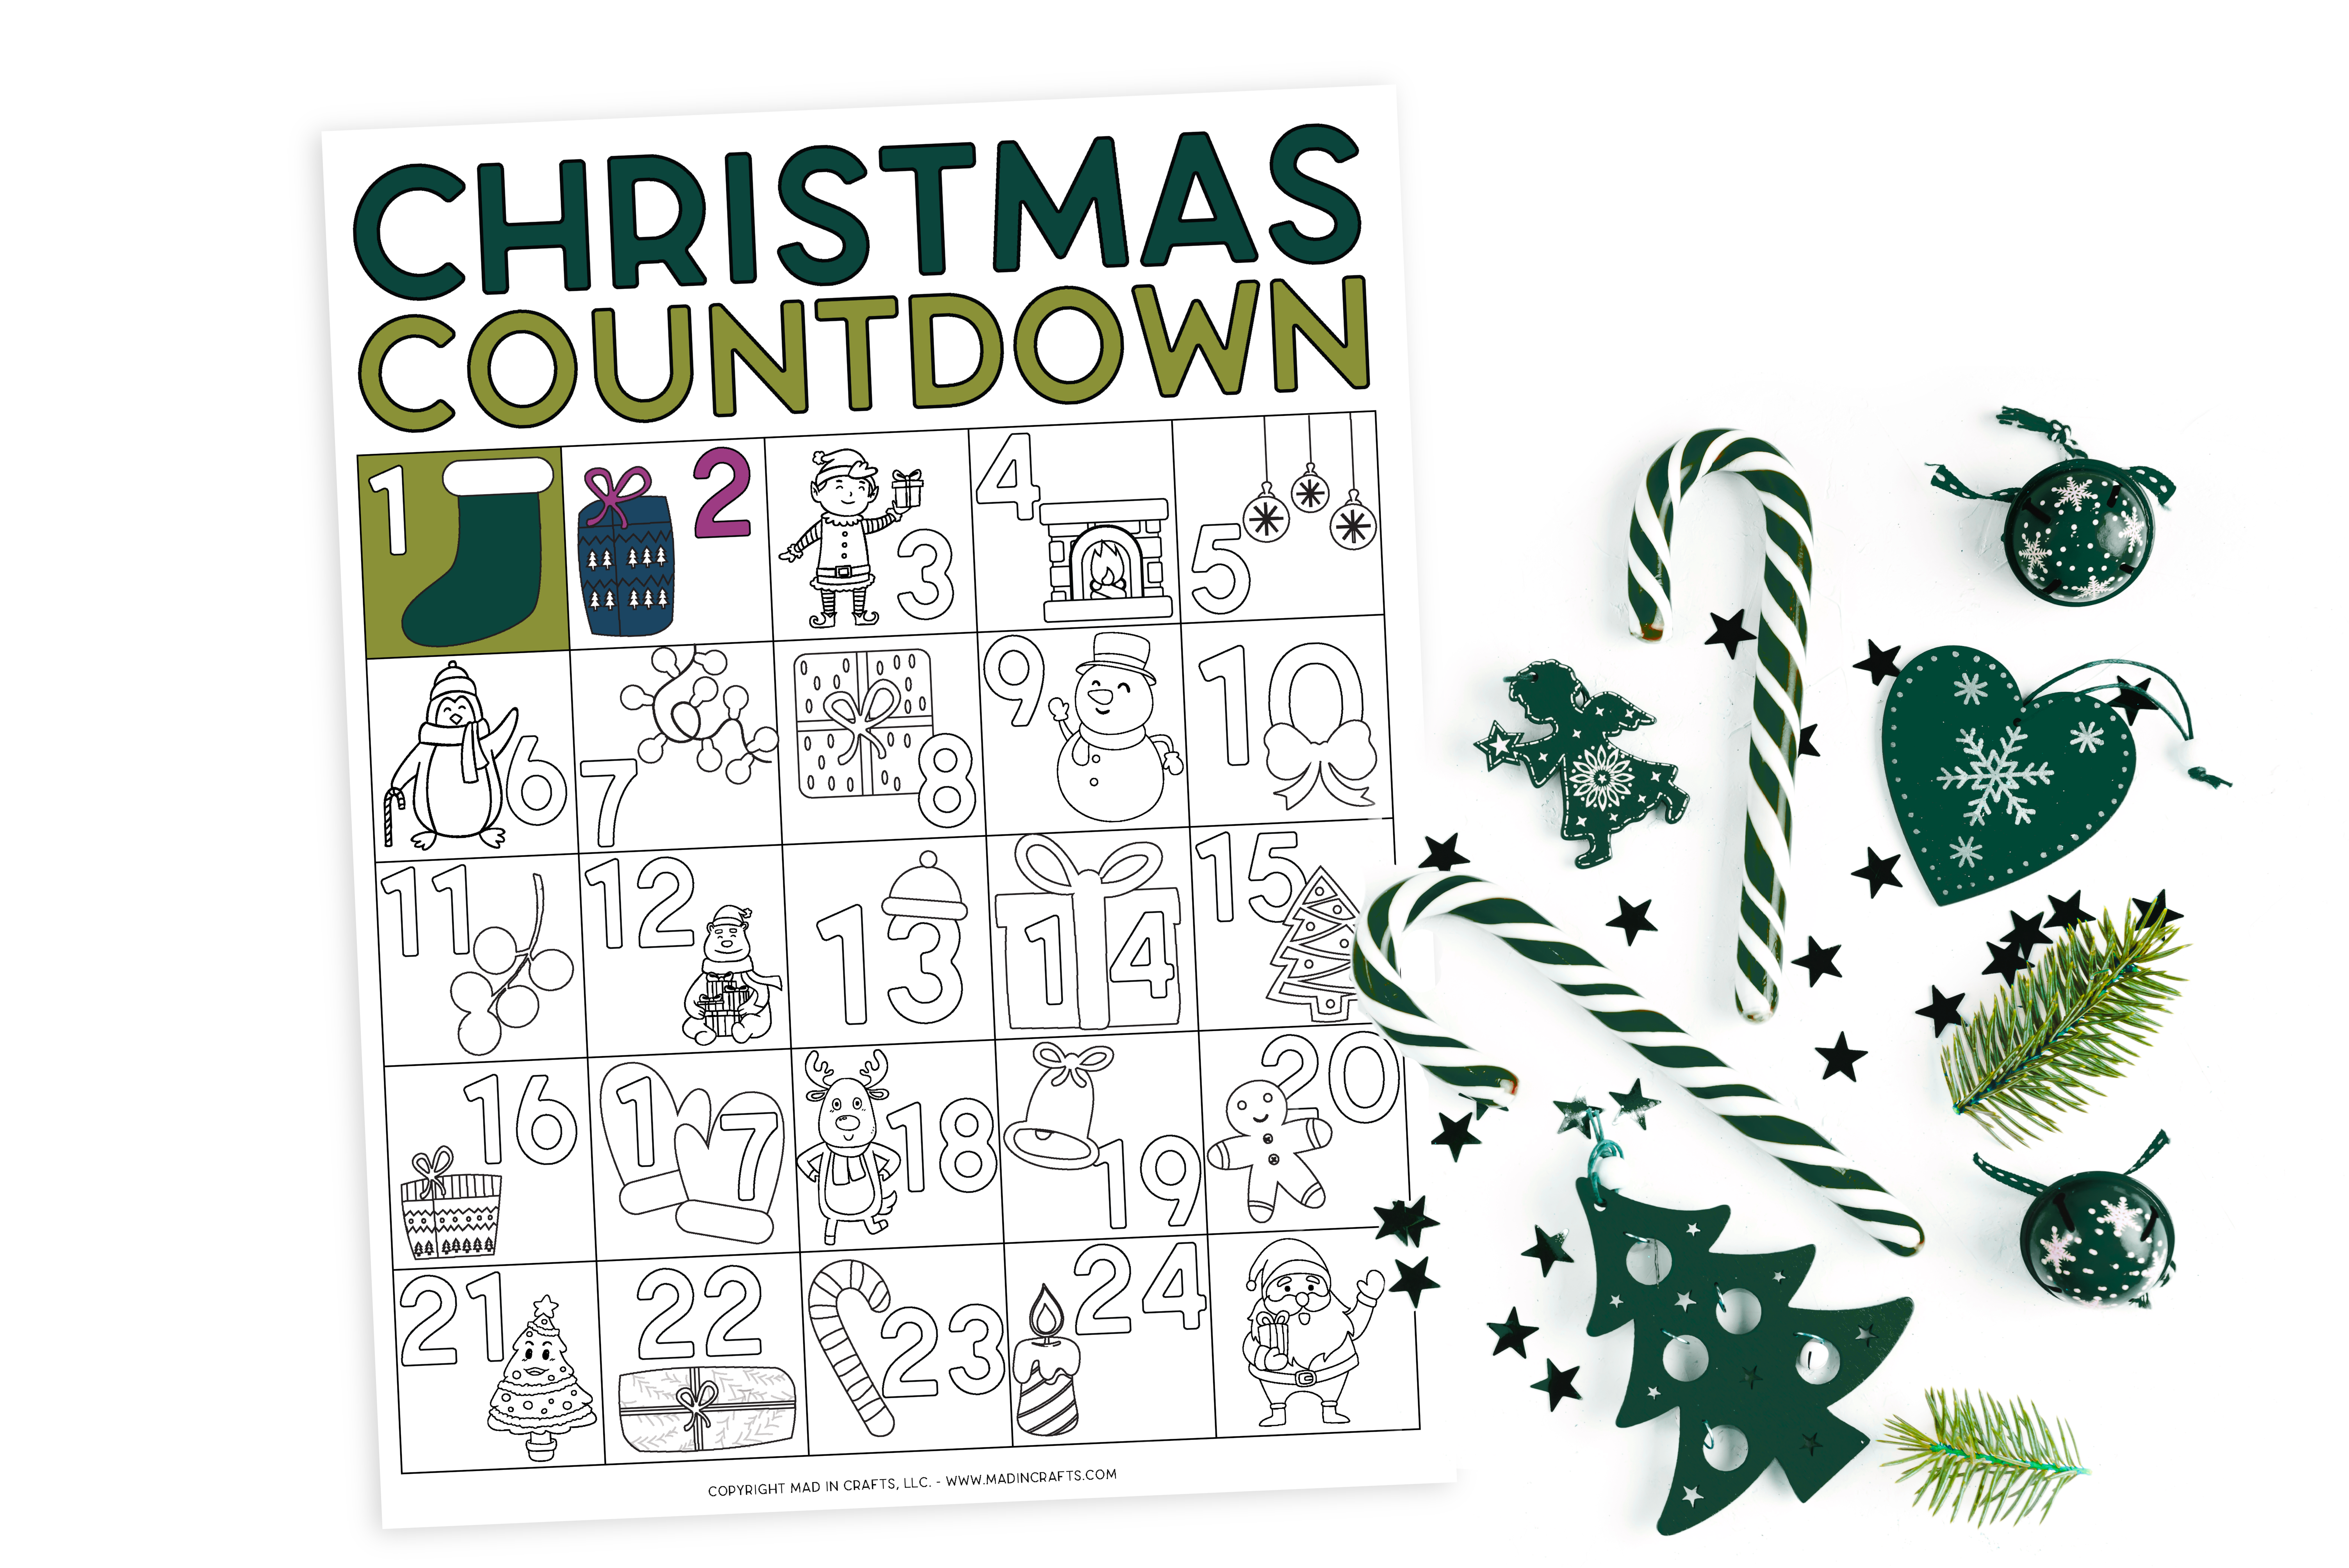 Partially coloring Christmas countdown calendar next to green ornaments